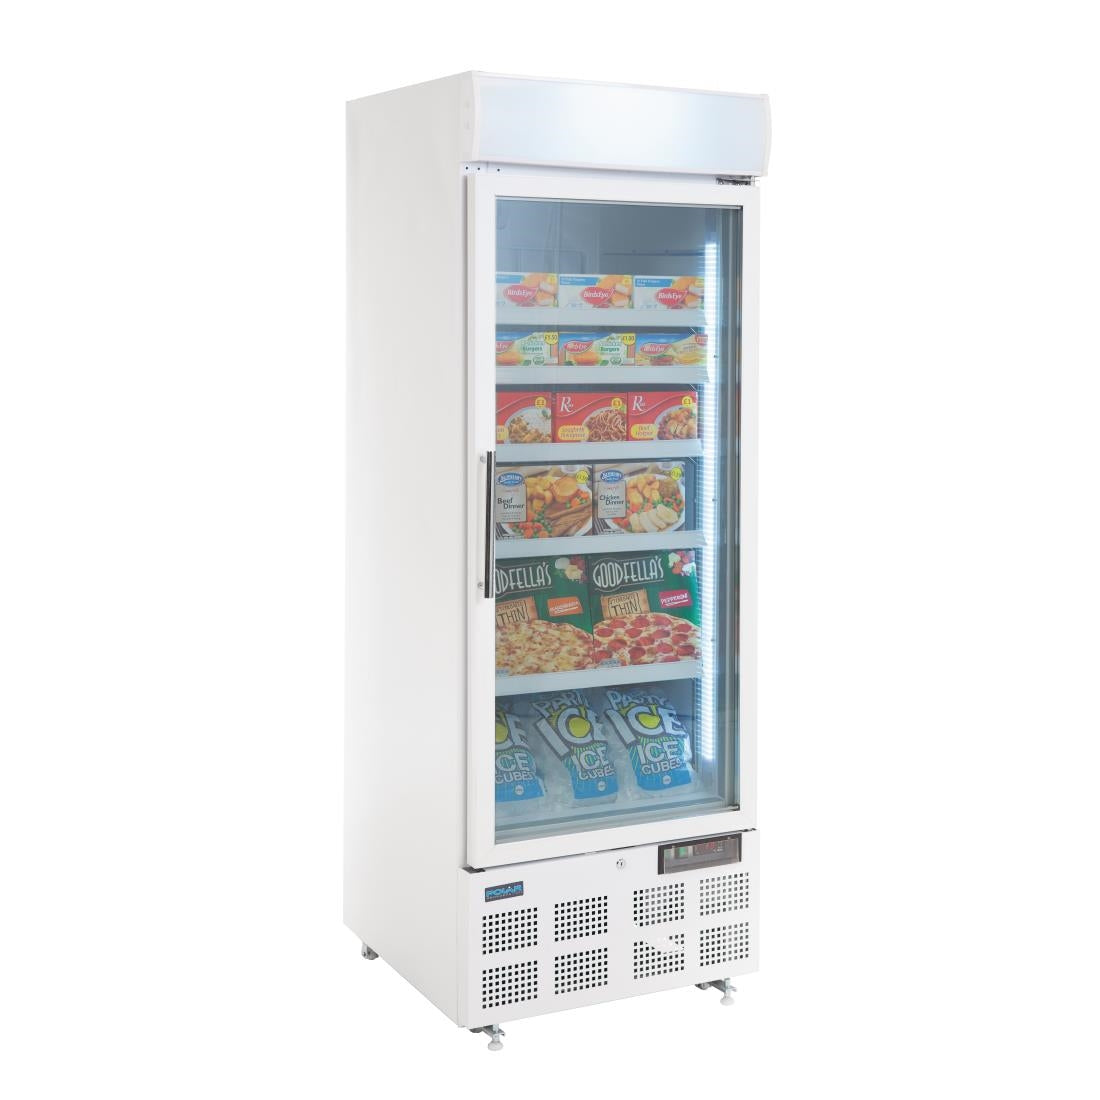 GH506 Polar G-Series Upright Display Freezer 412Ltr White JD Catering Equipment Solutions Ltd